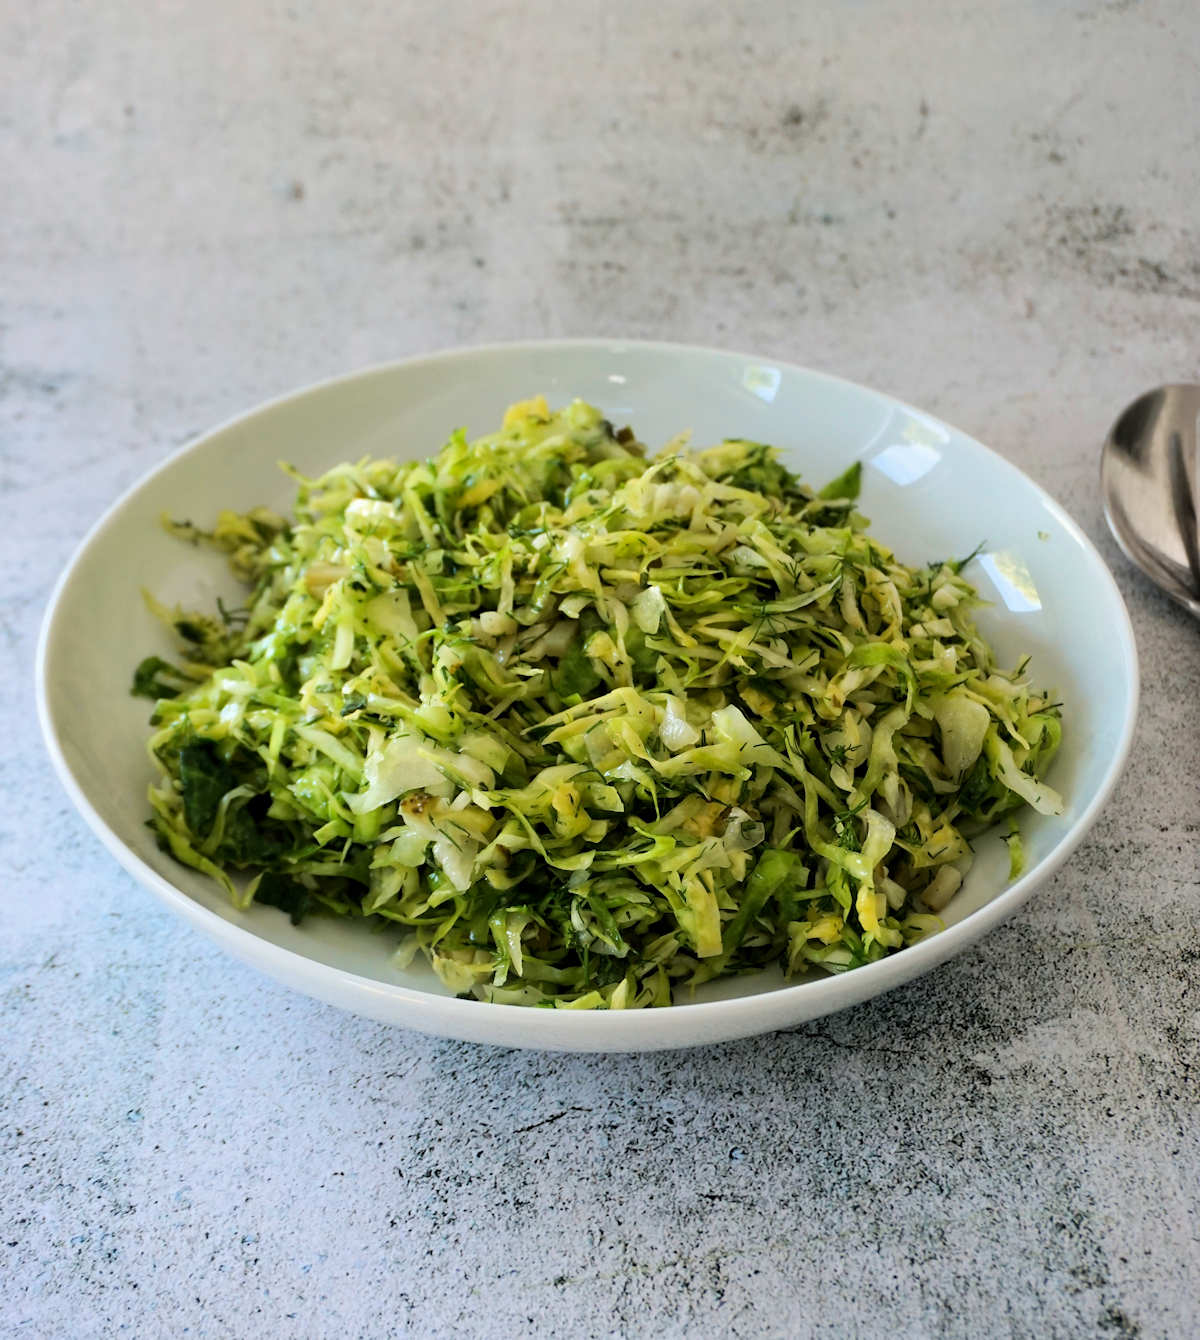 https://www.cuisinefiend.com/RecipeImages/Cabbage%20salad/spring-cabbage-salad-2.jpg